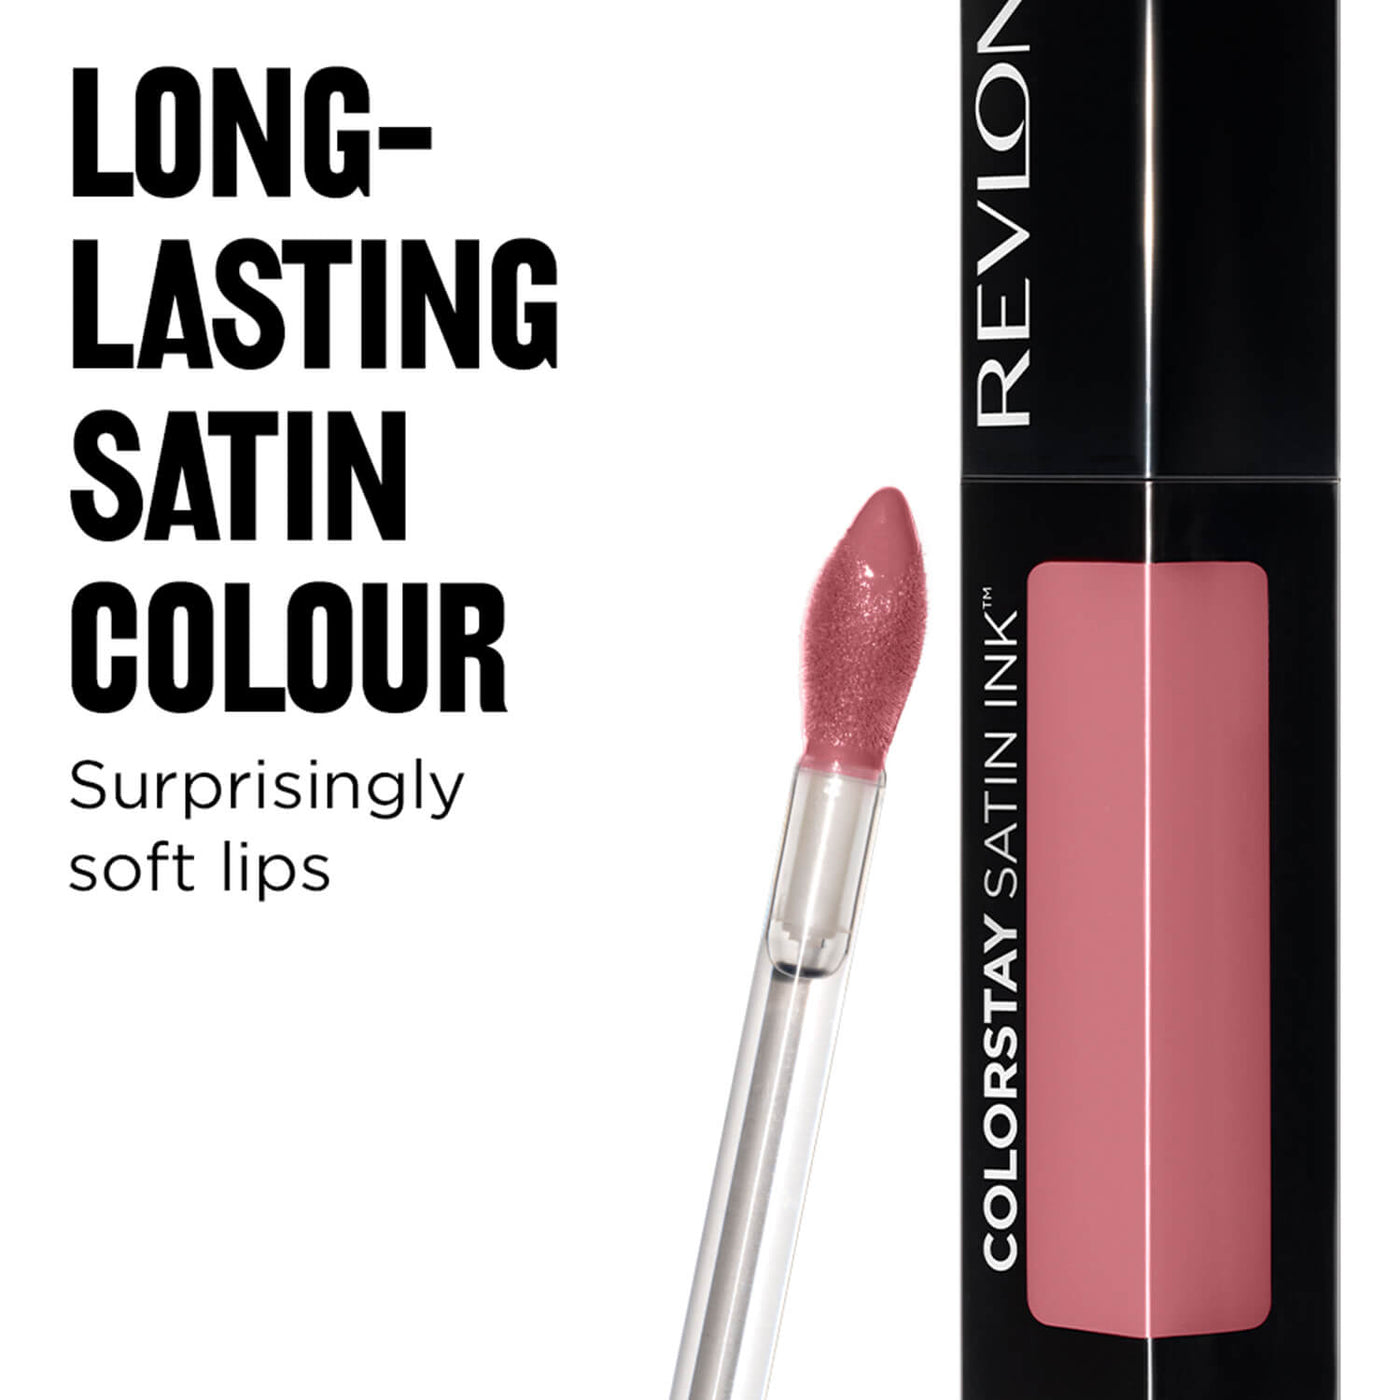 Revlon Colorstay Satin Ink Liquid Lip Color